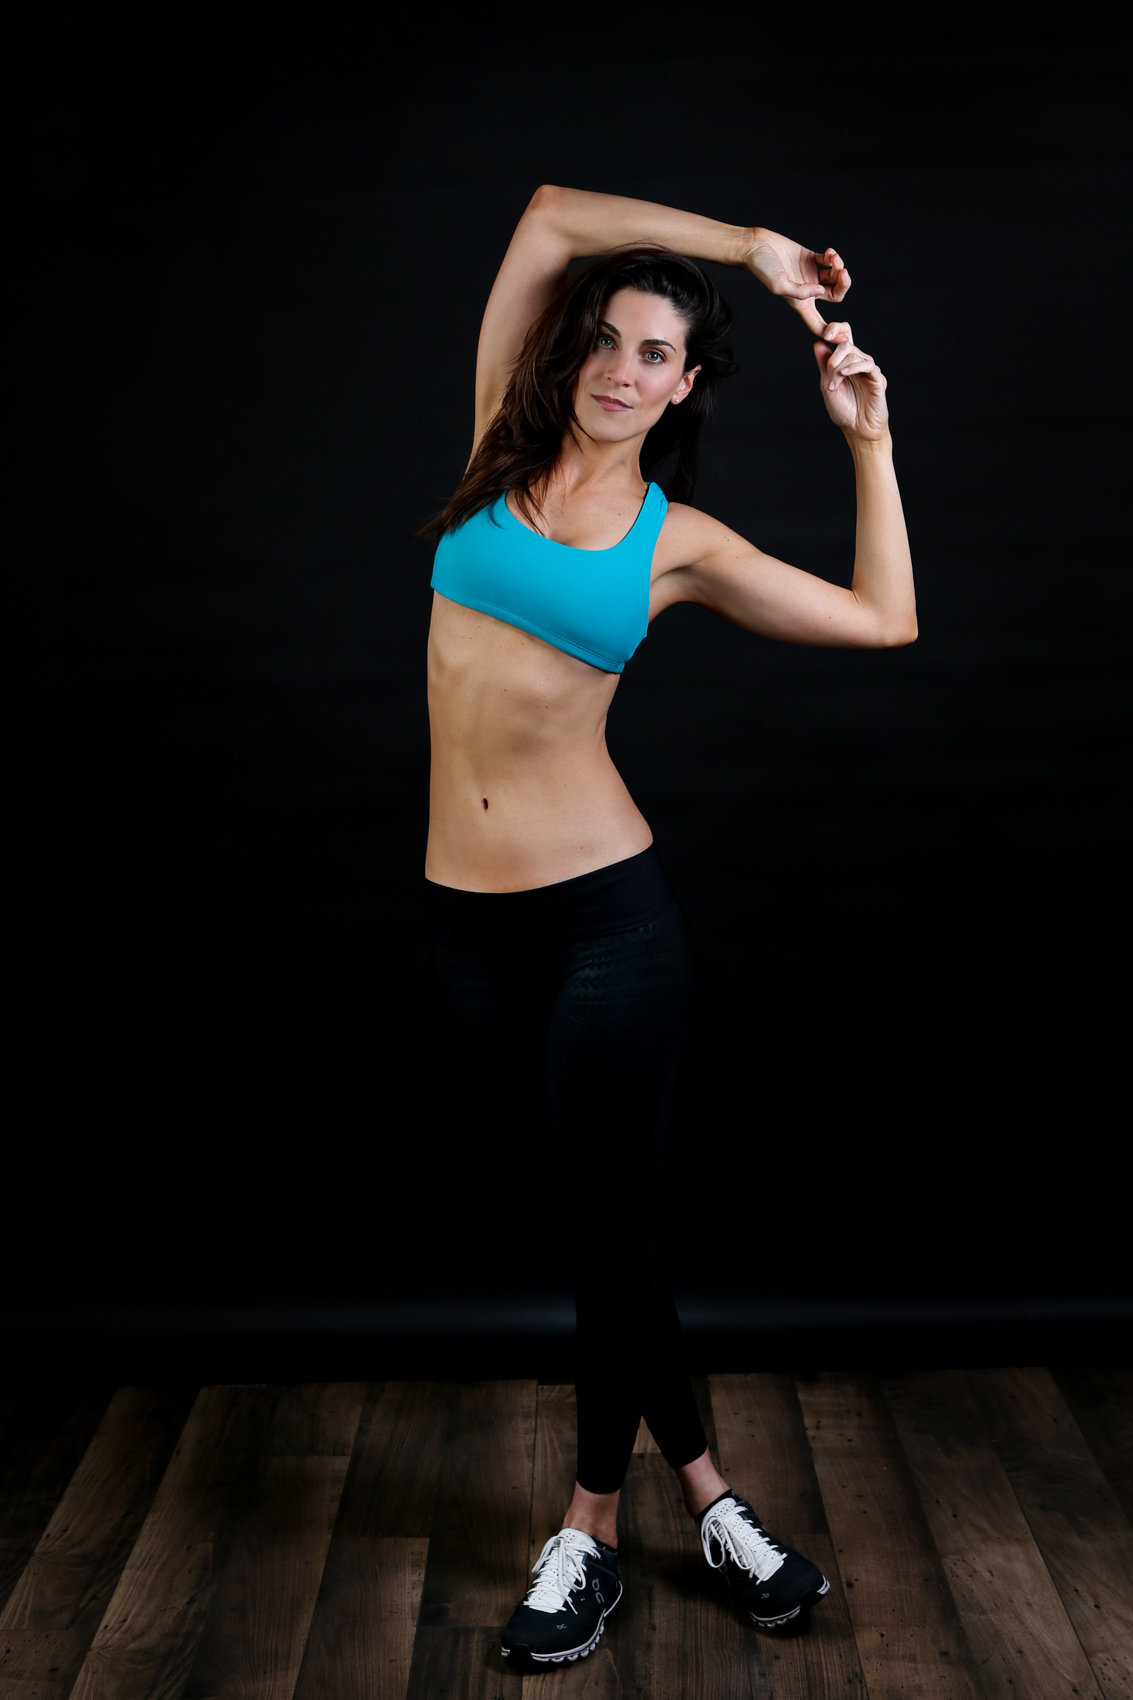 In Studio Fitness Model Photography Photoshoot